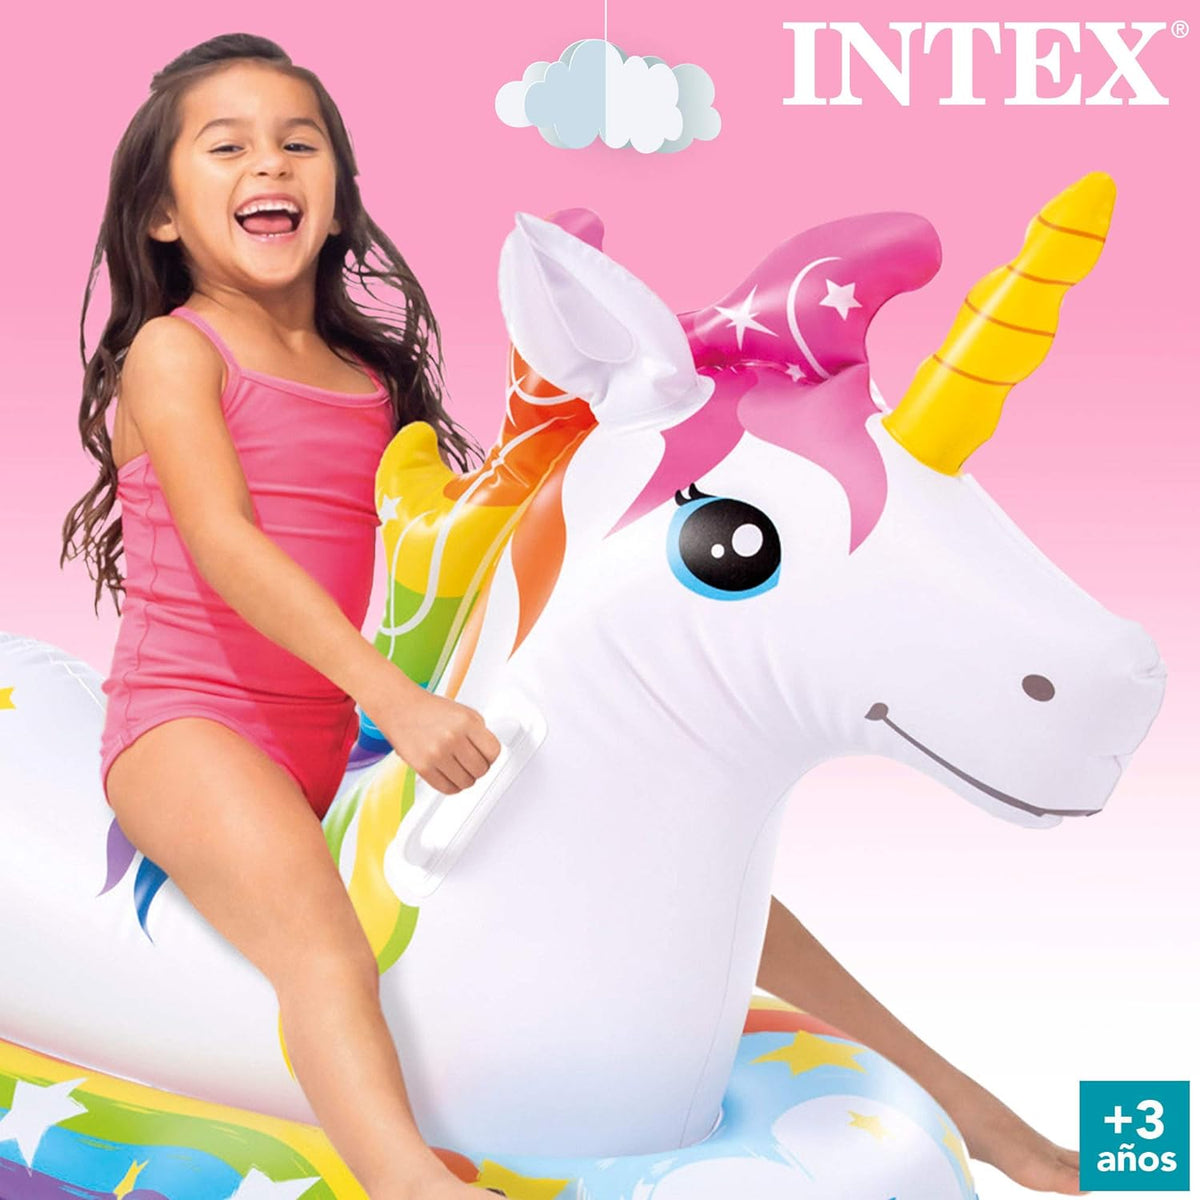 Intex 57552NP Unicorn Ride-On